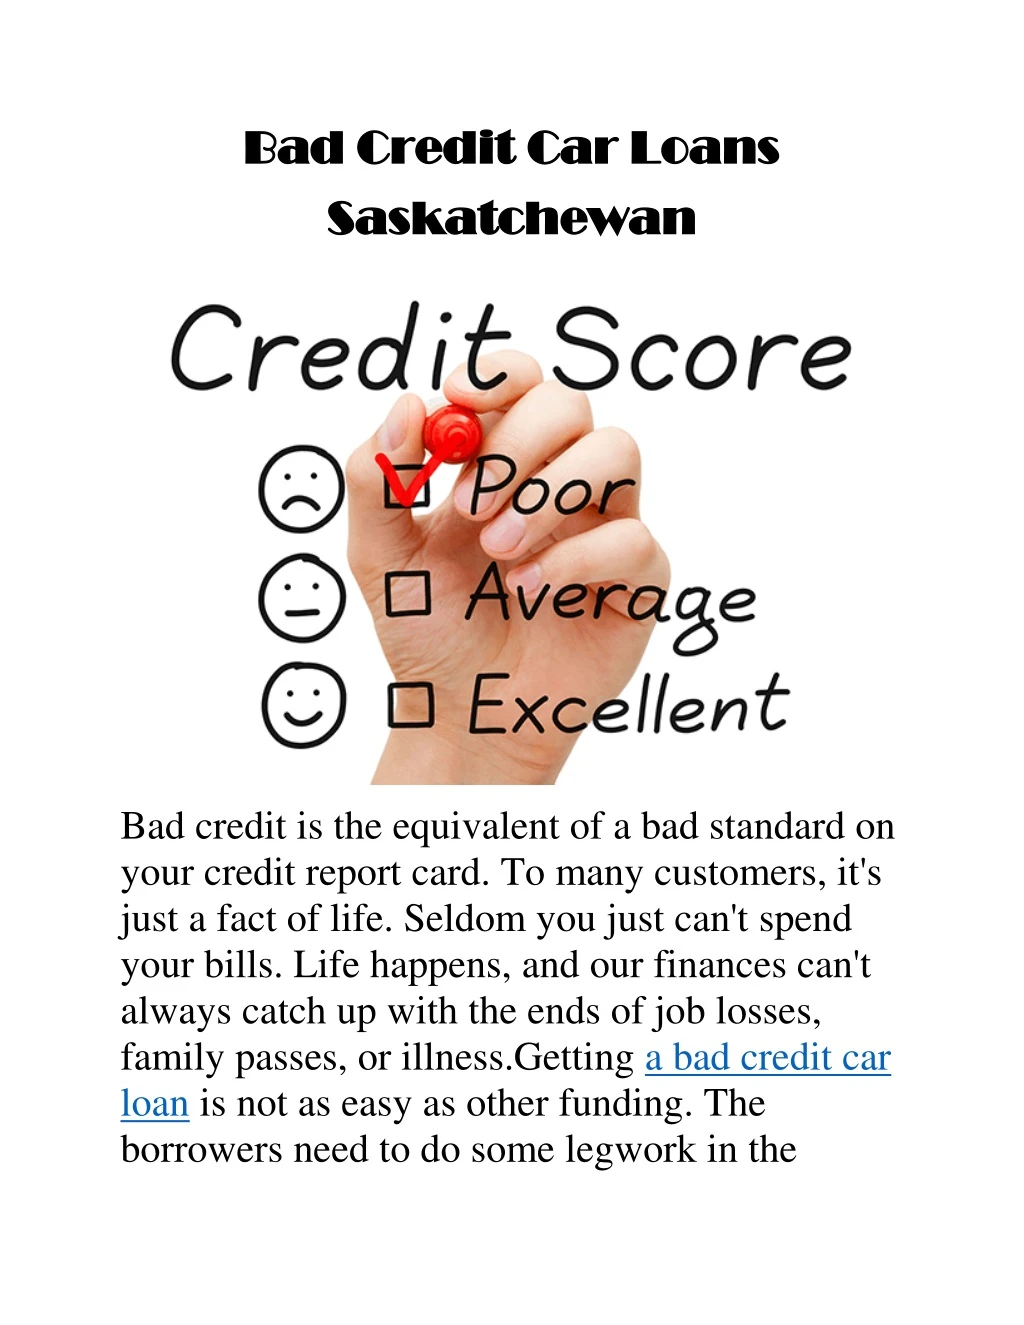 bad credit car loans bad credit car loans